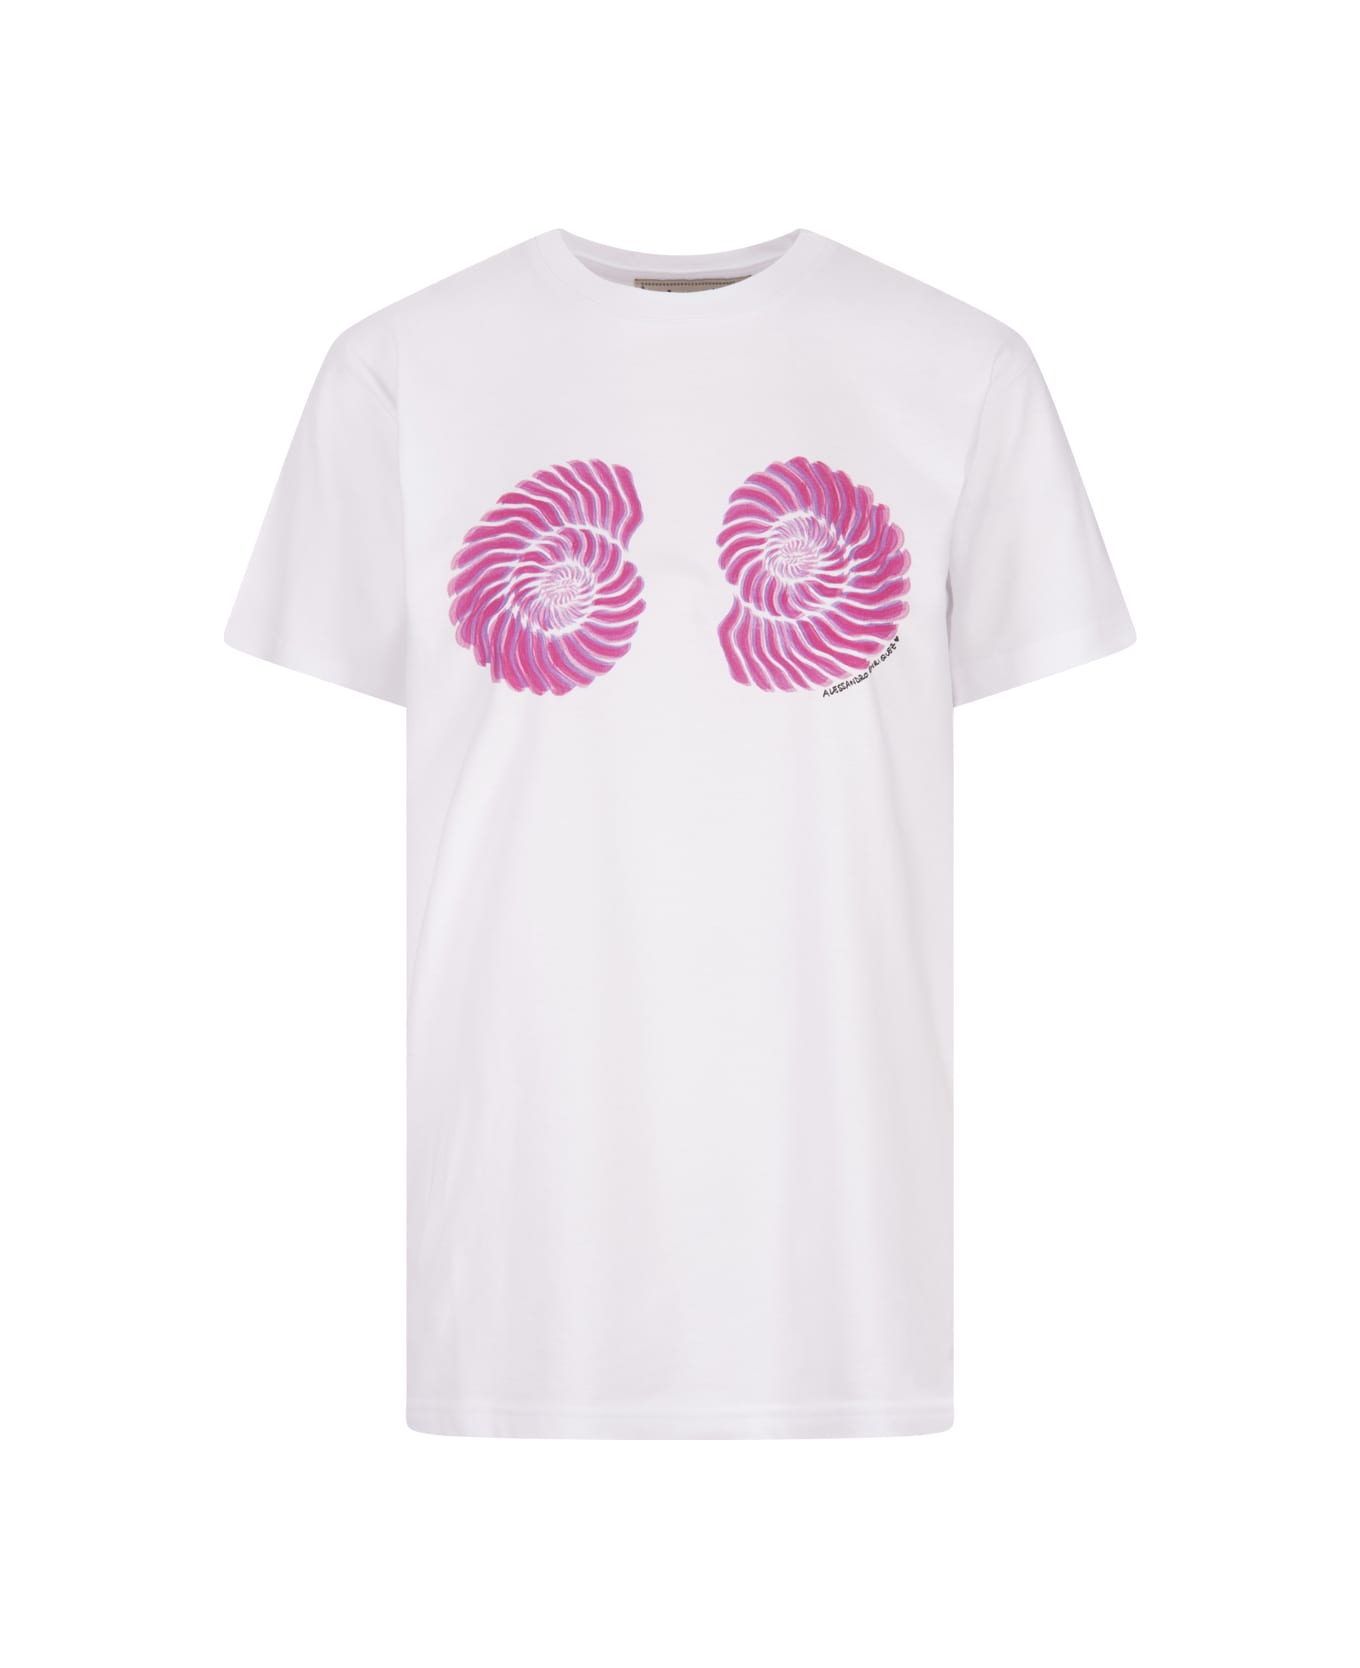 Alessandro Enriquez White T-shirt With Ammonite Print - White